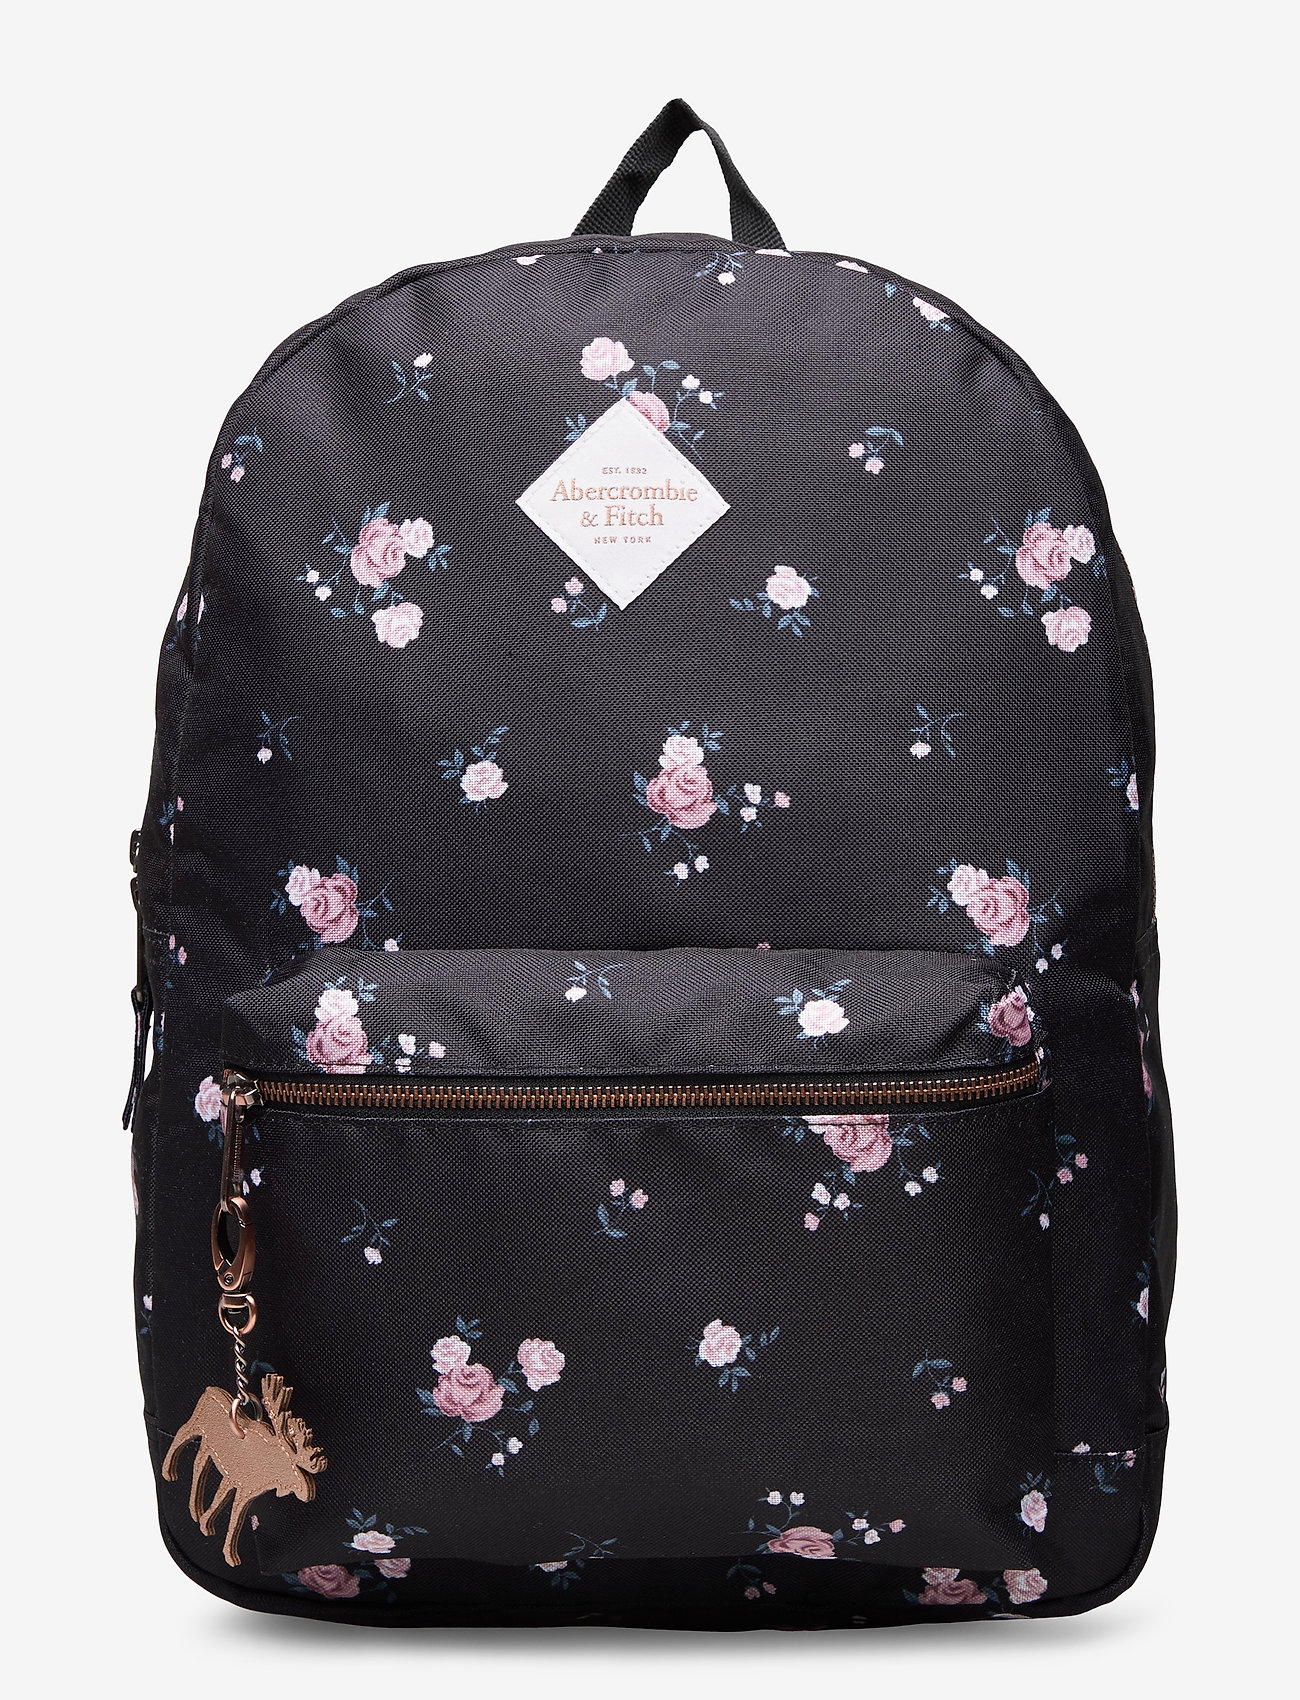 abercrombie backpack women's